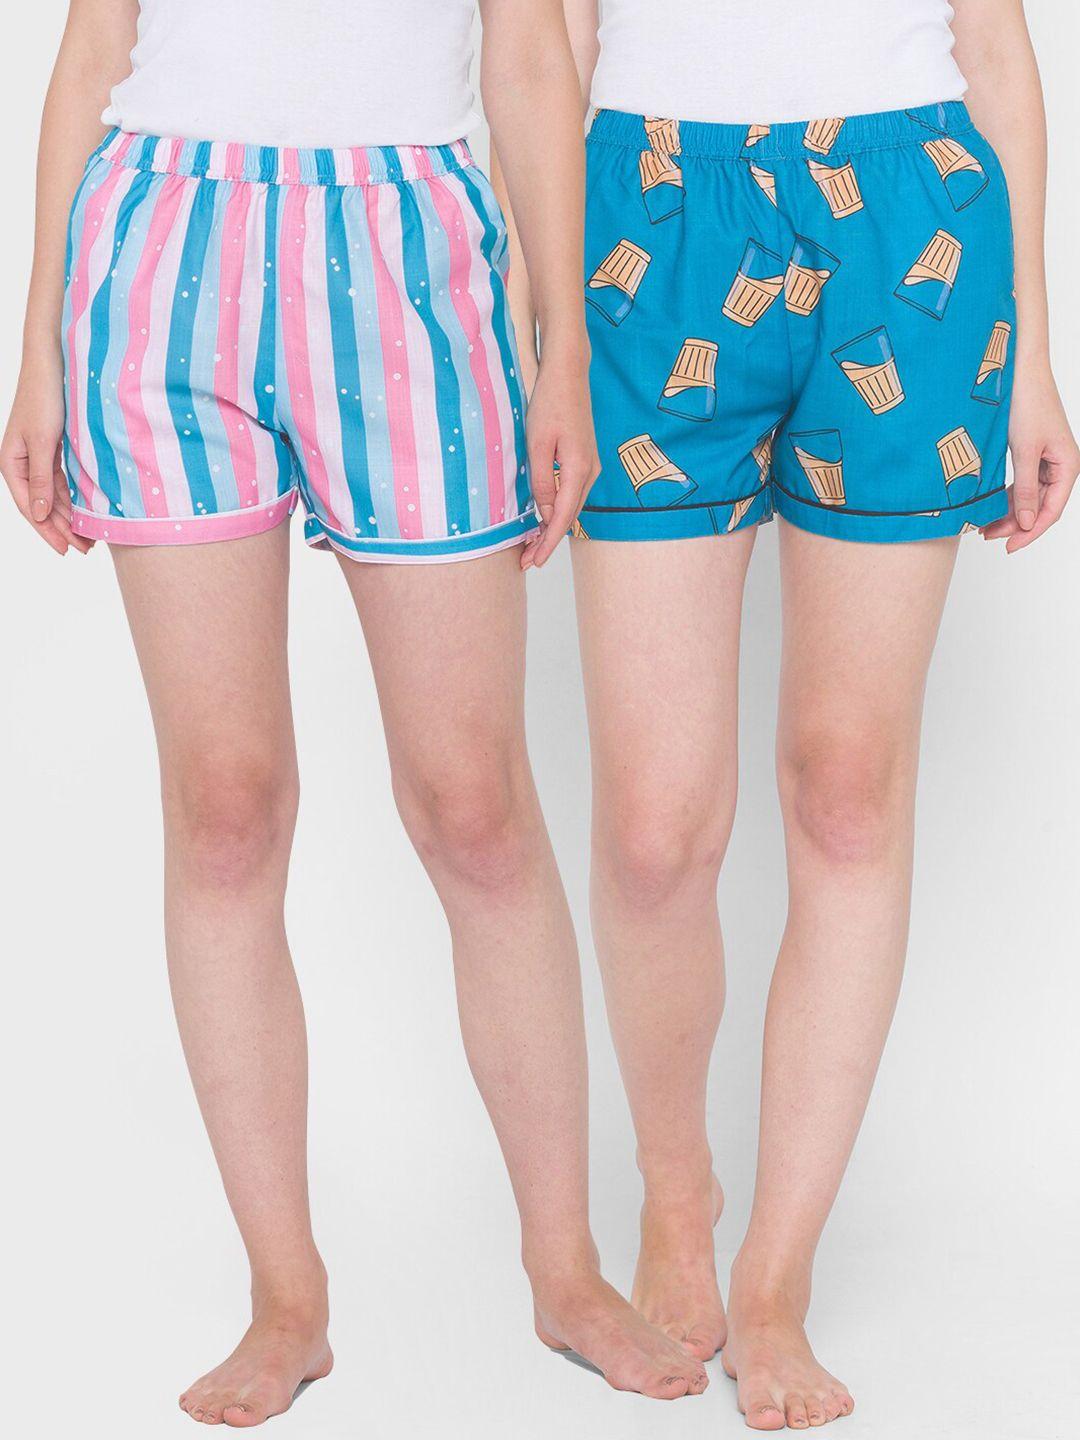 fashionrack women pack of 2 printed lounge shorts